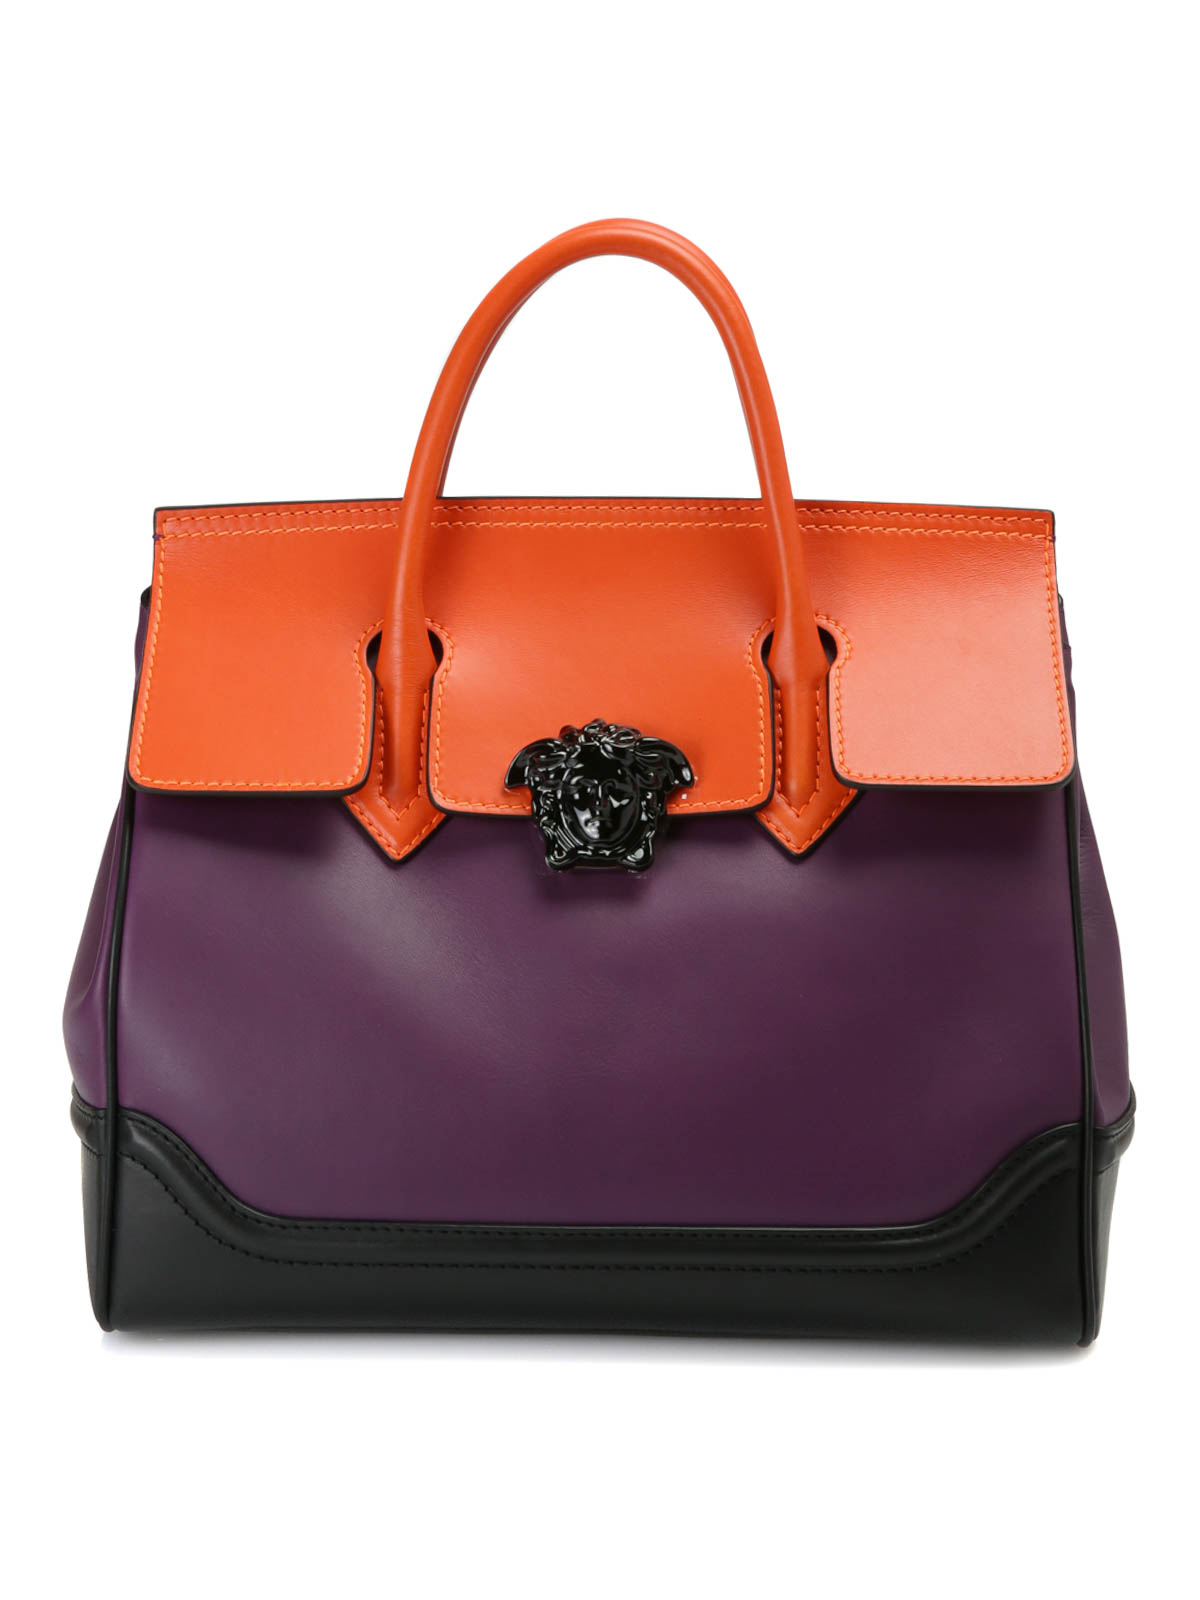 Versace Bag Palazzo Medium Violet Leather | 3D model